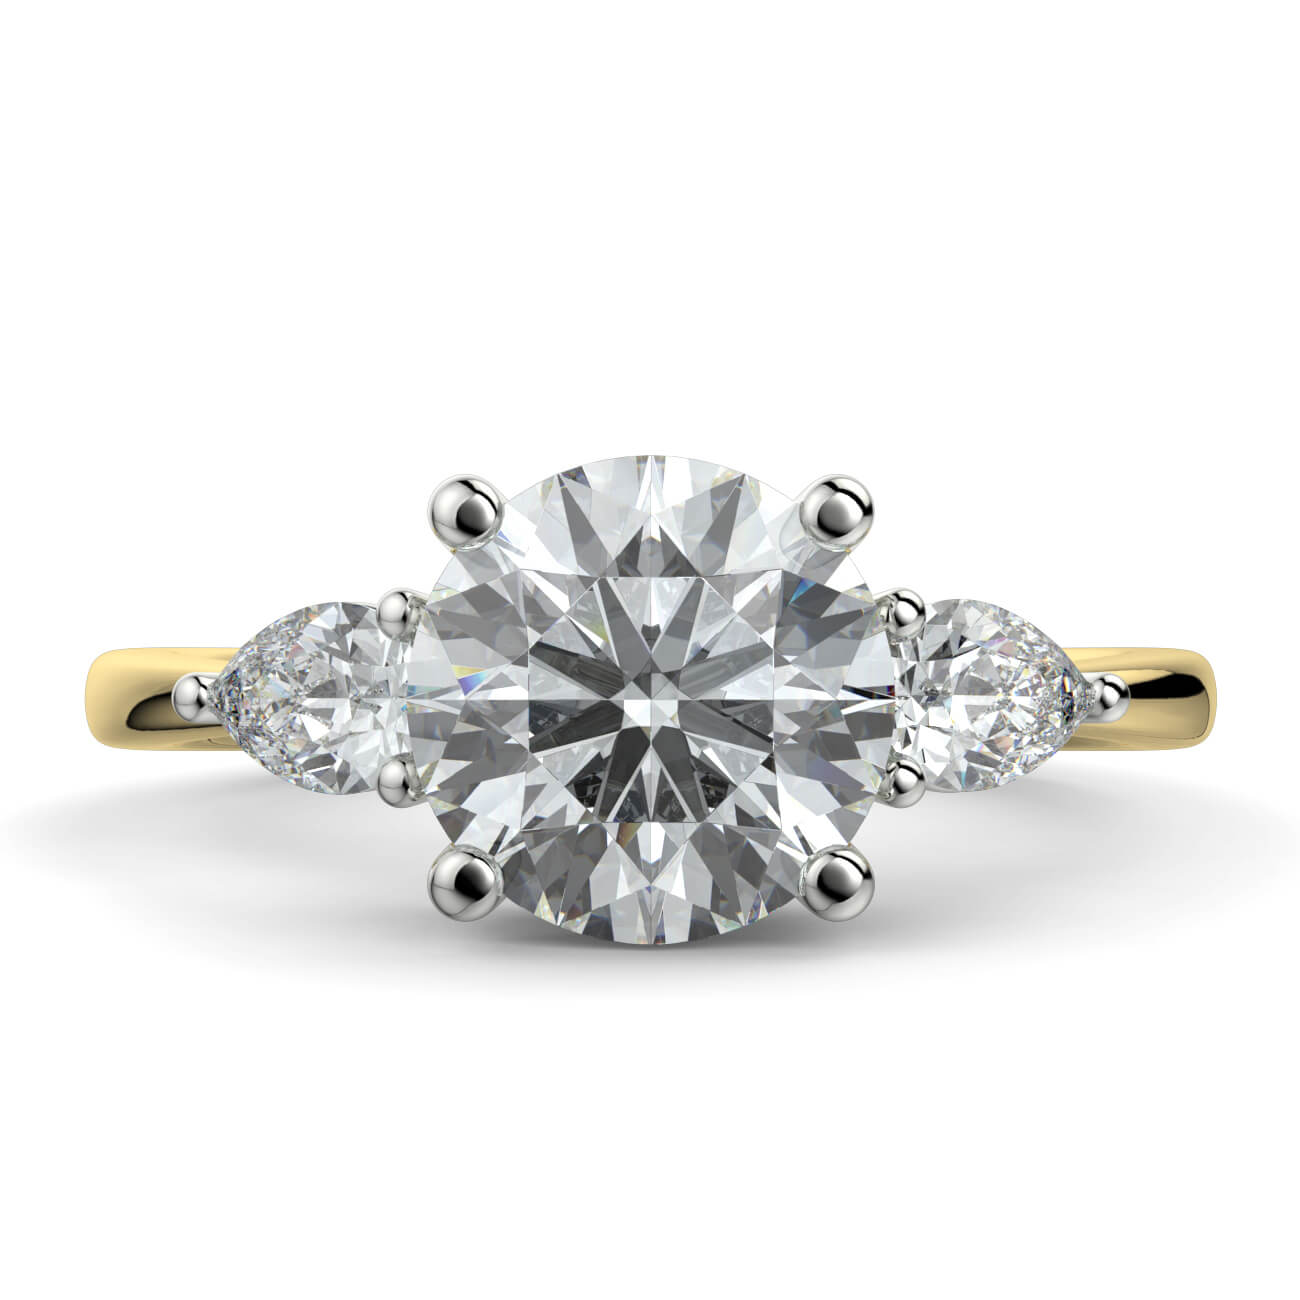 Round Brilliant Cut Diamond Ring With Pear Shape Side Diamonds In Yellow & White Gold – Australian Diamond Network